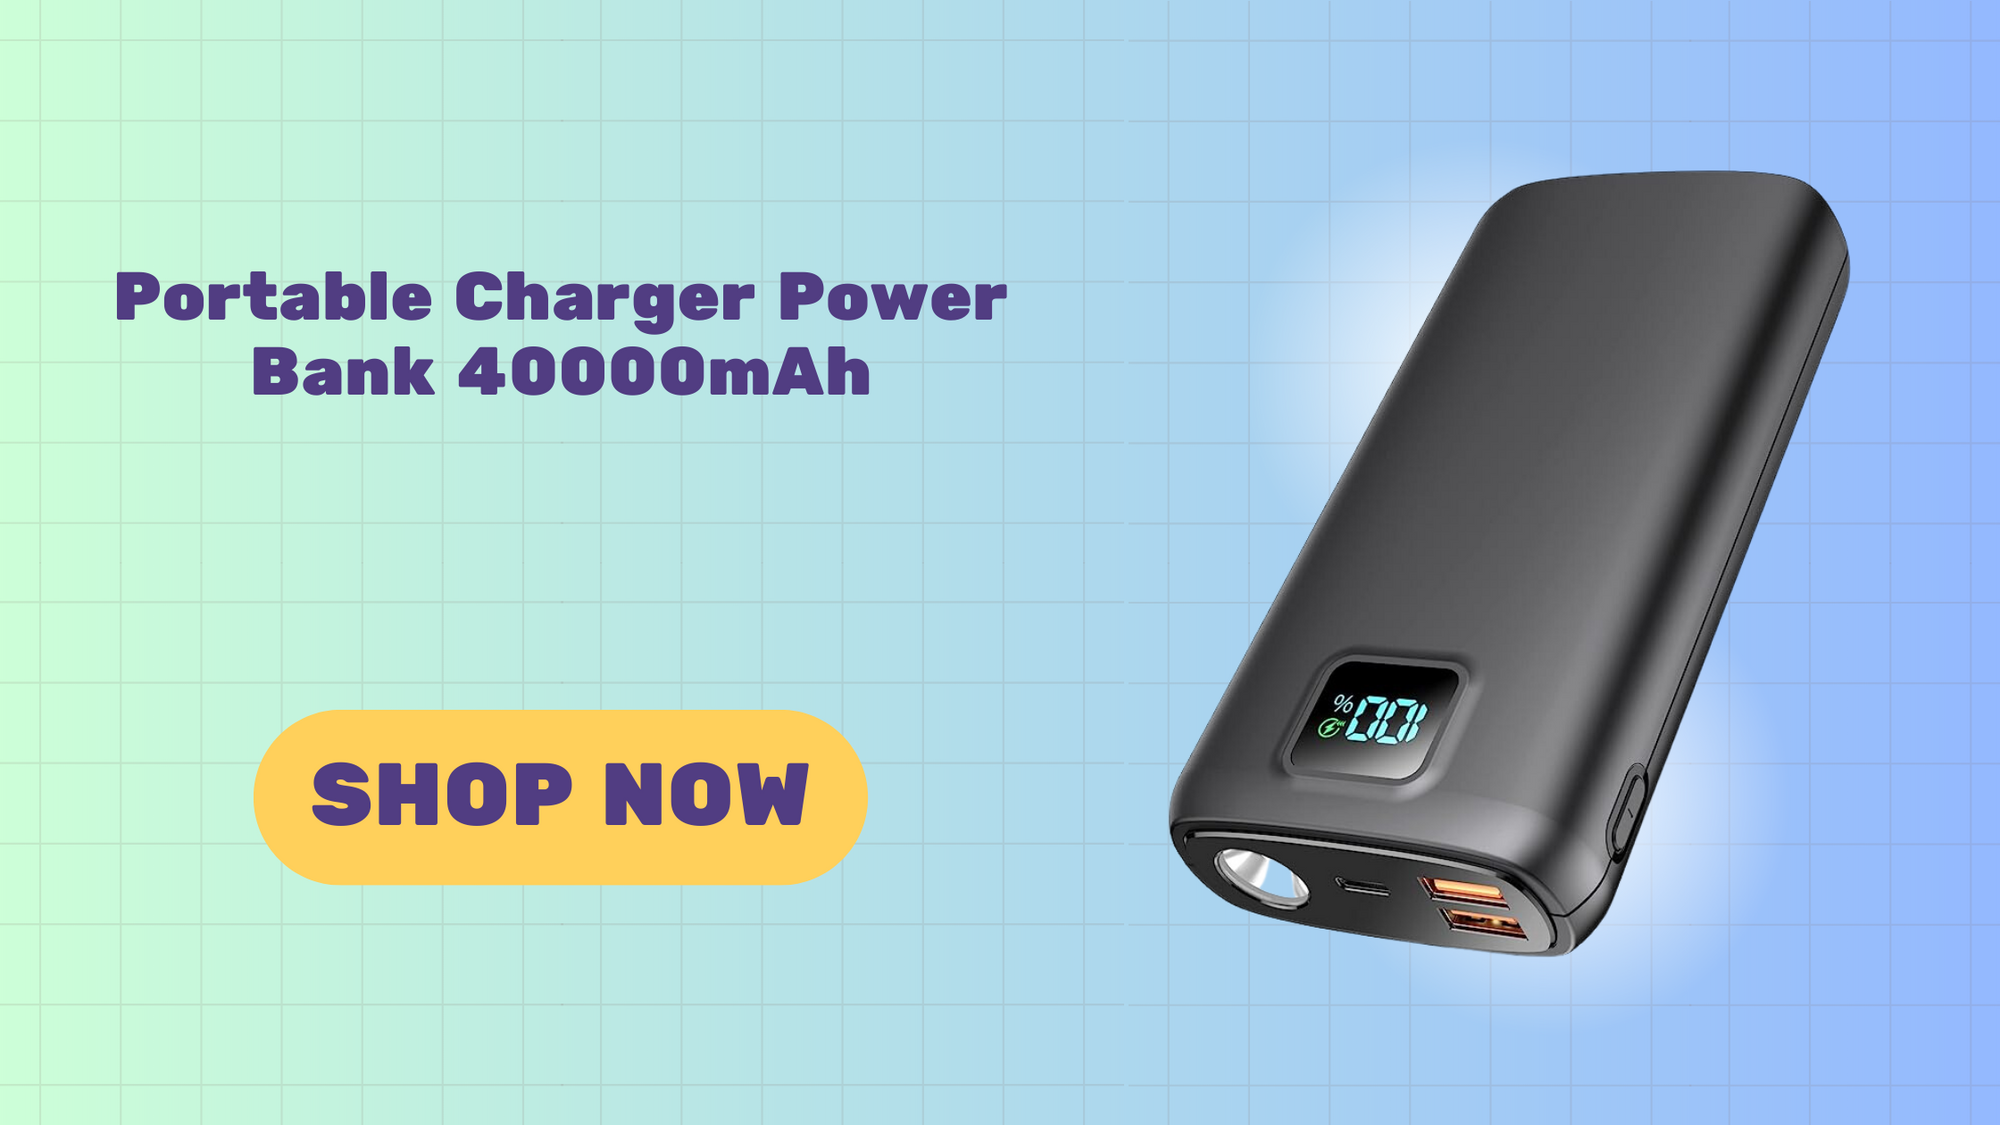 Portable Charger Power Bank 40000mAh